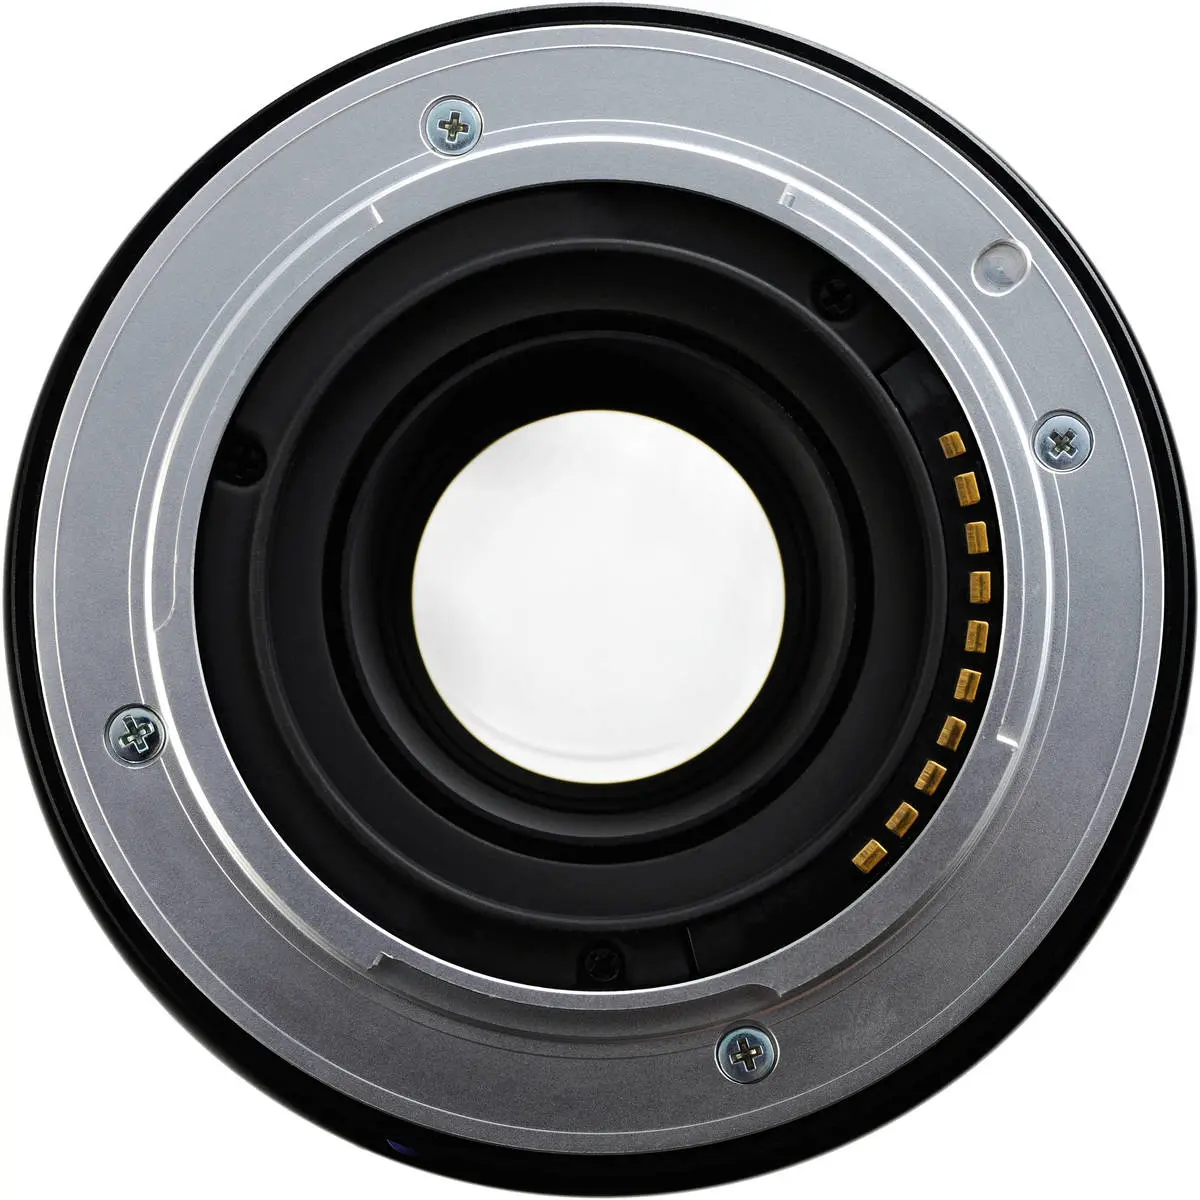 7. Carl Zeiss Touit 2.8/12 Distagon T* (Sony E) Lens